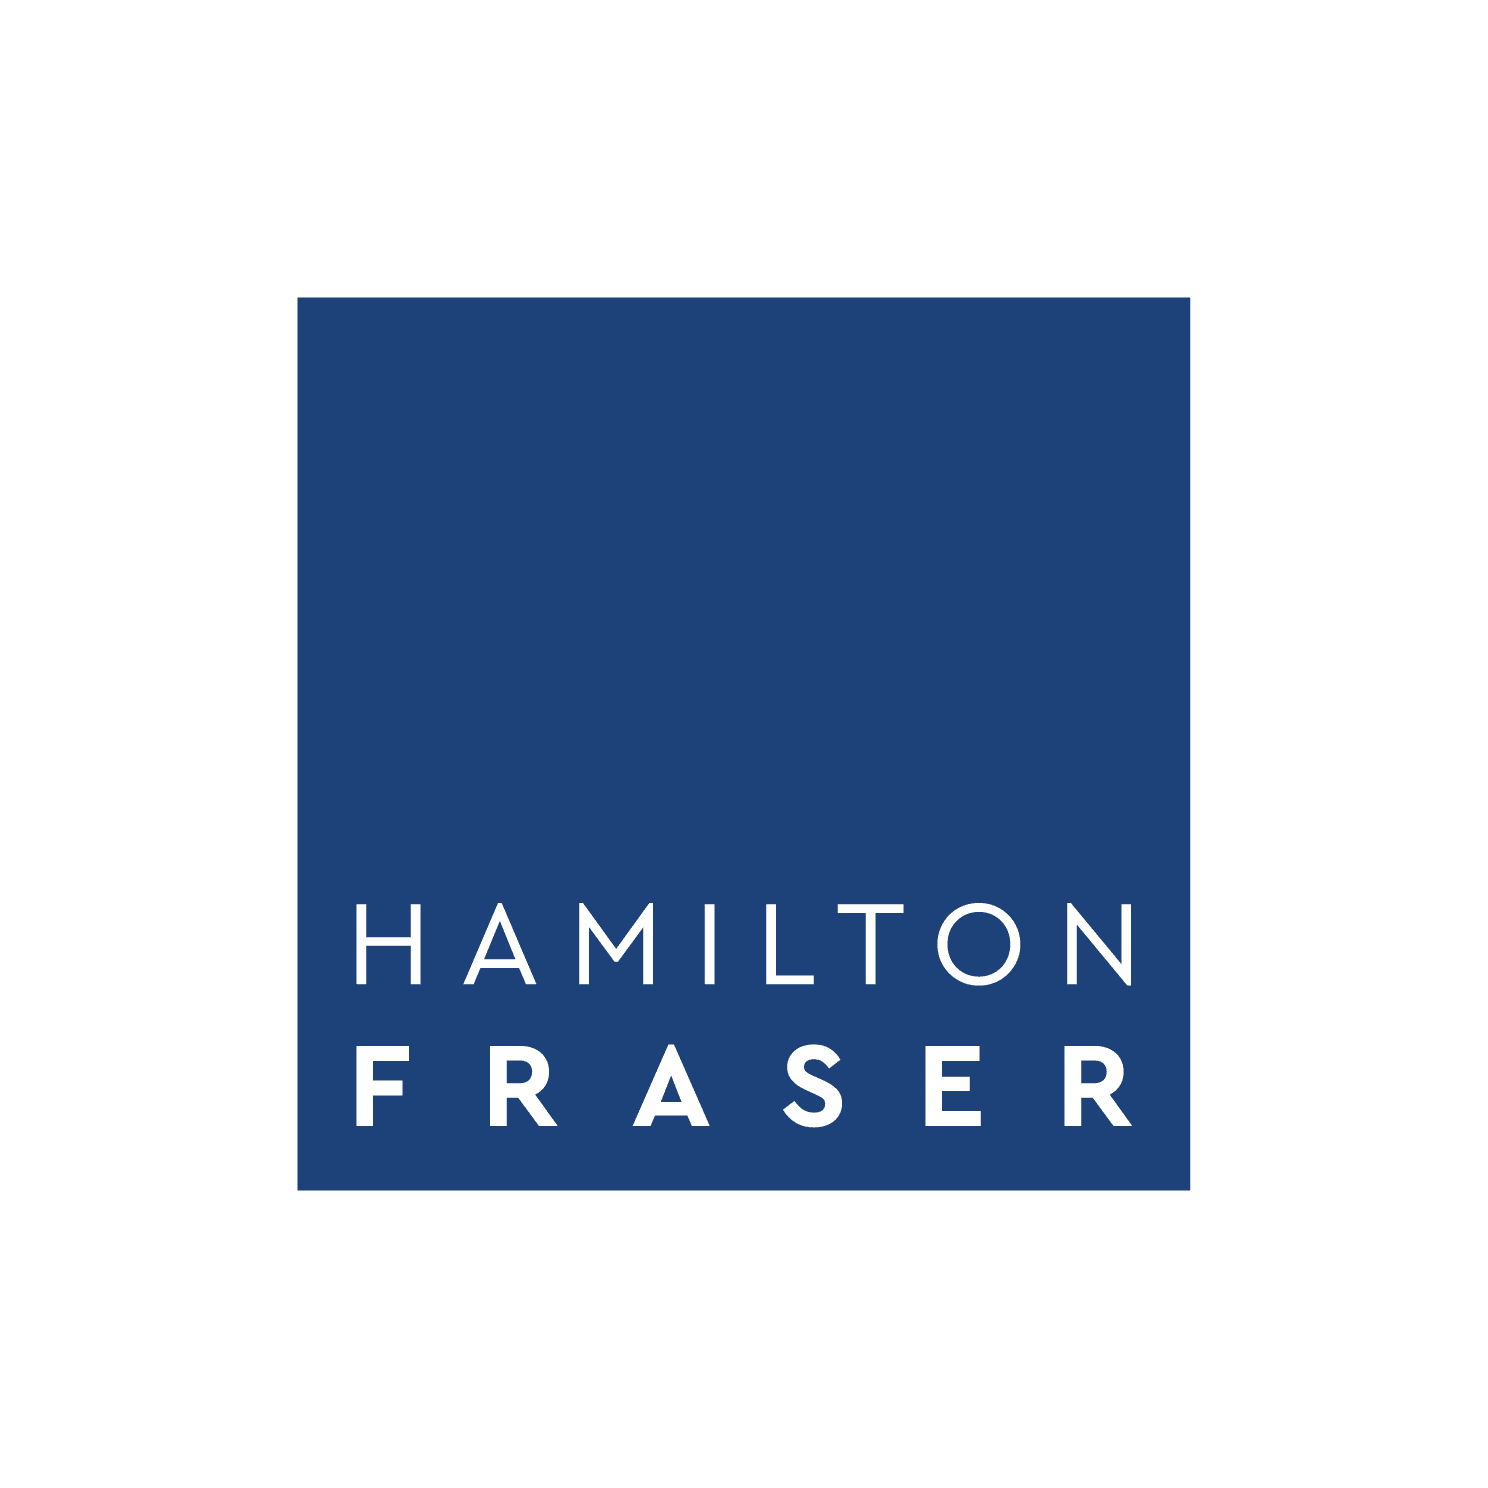 Hamilton Fraser logo